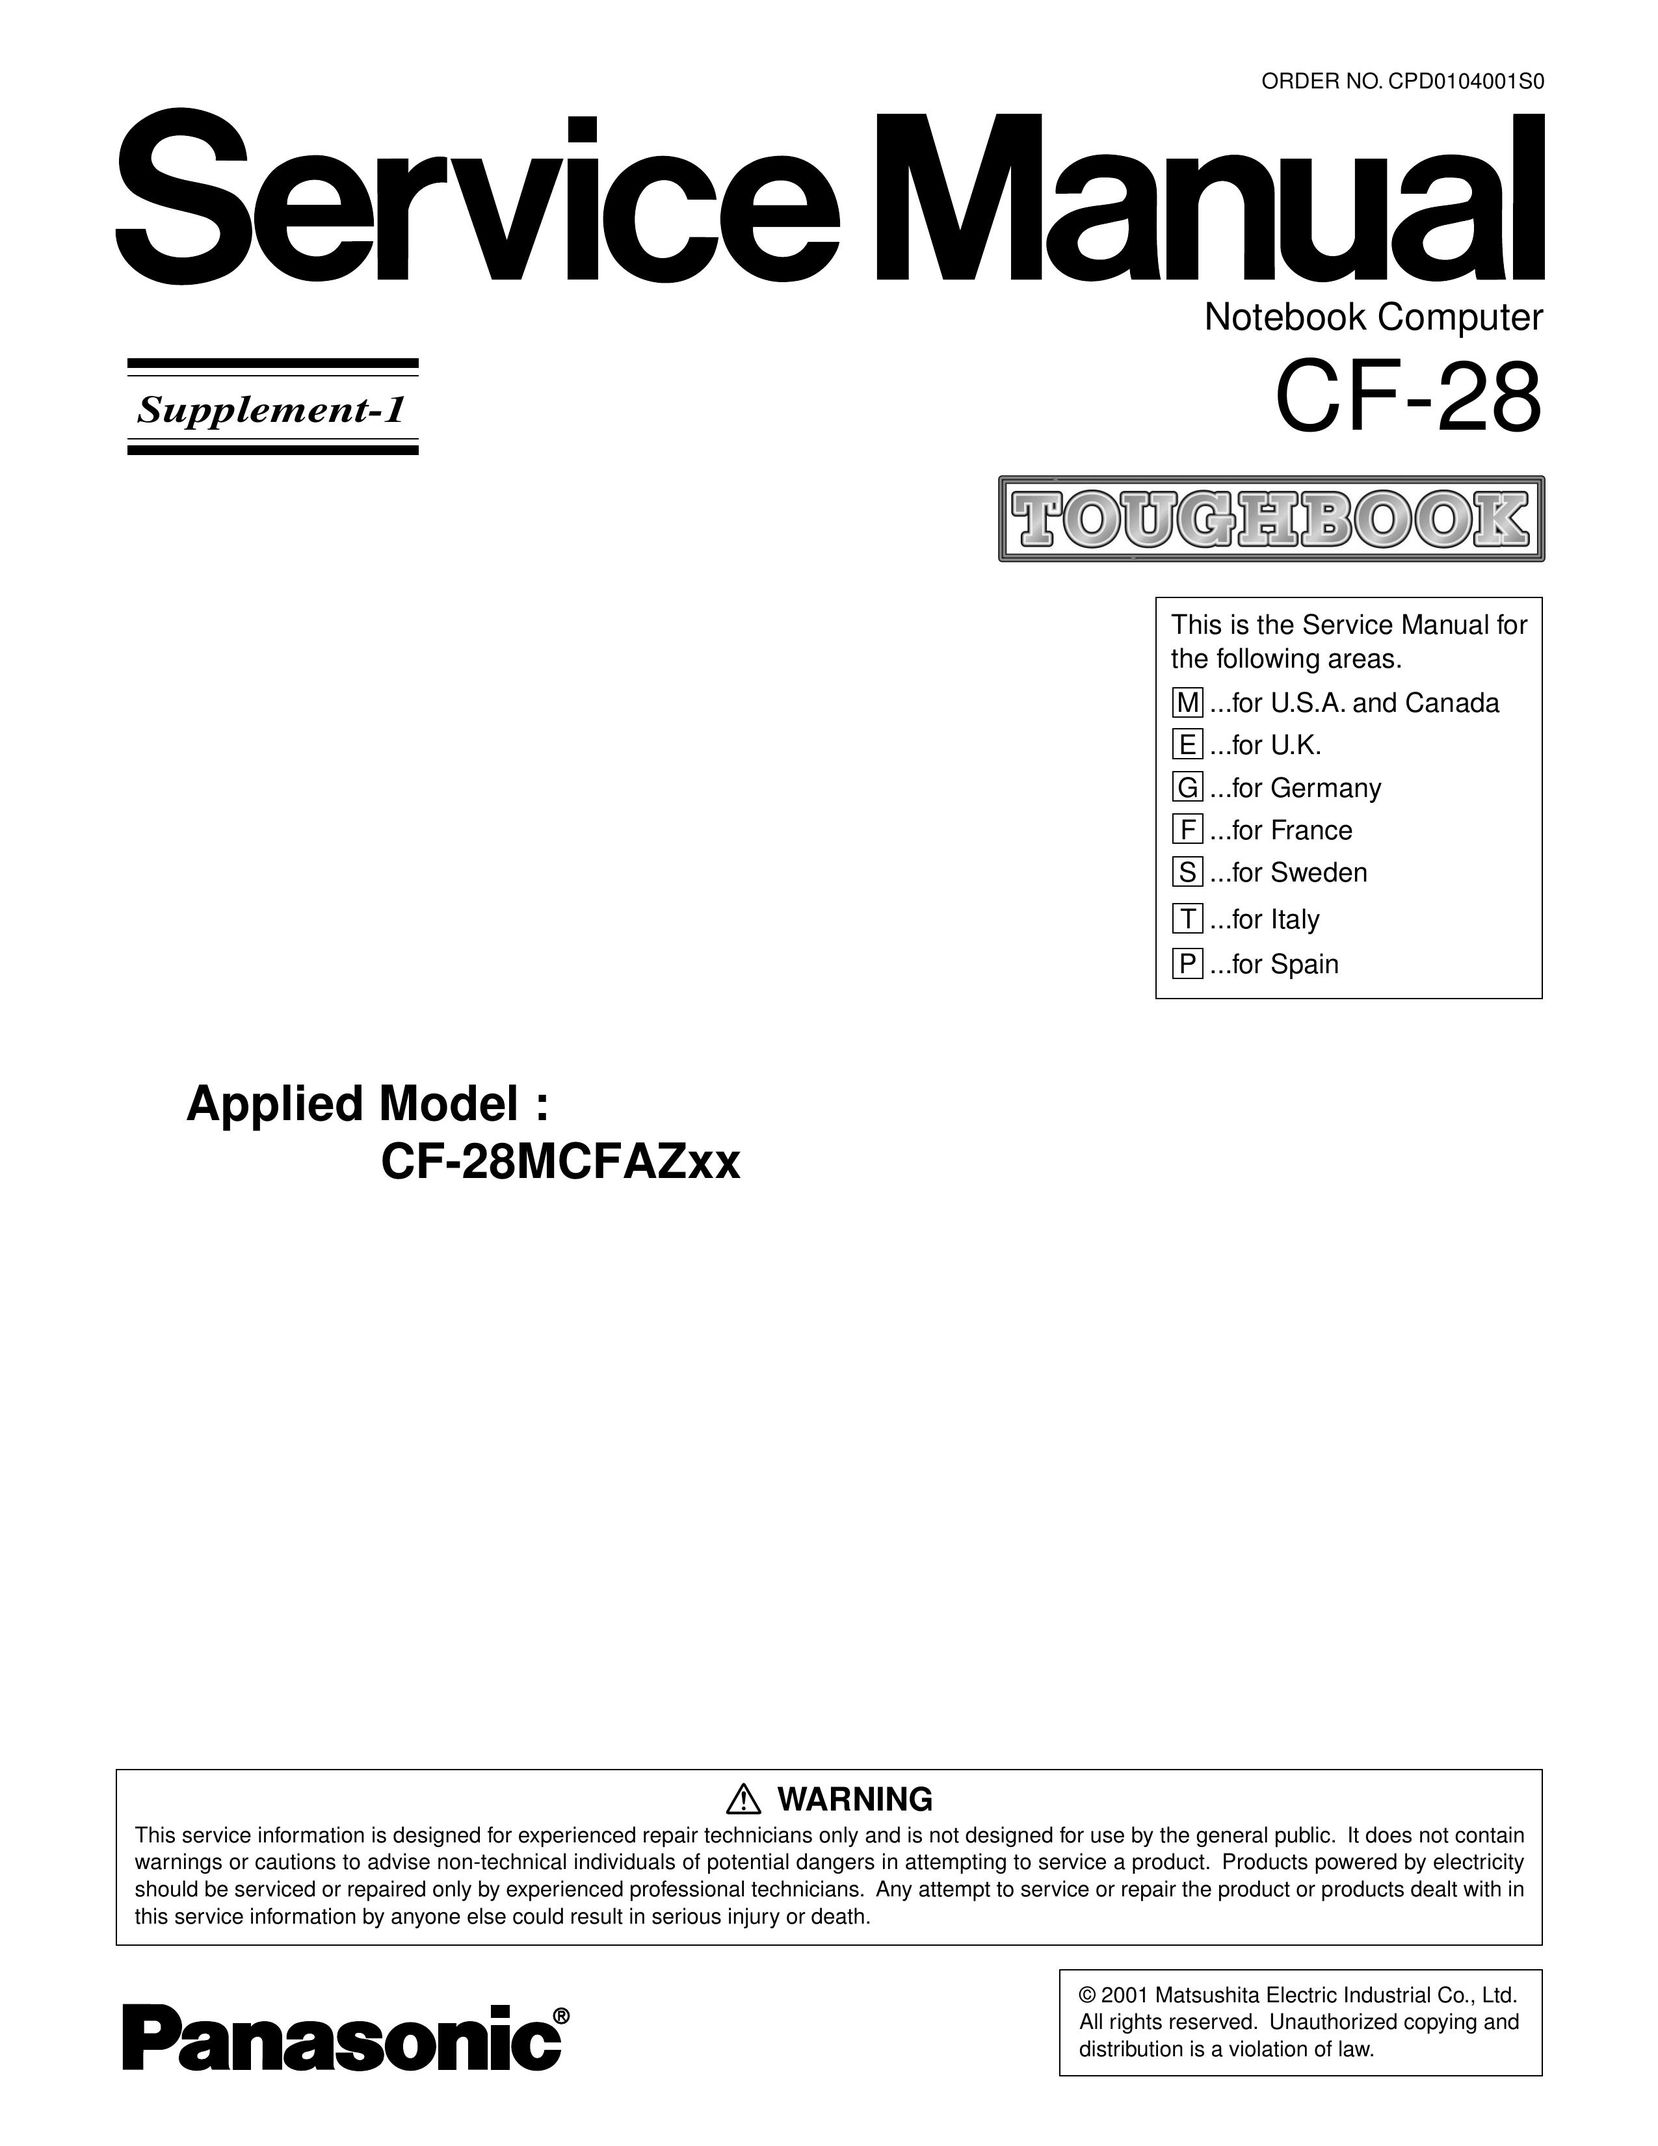 Panasonic CF-28MCFAZ Laptop User Manual